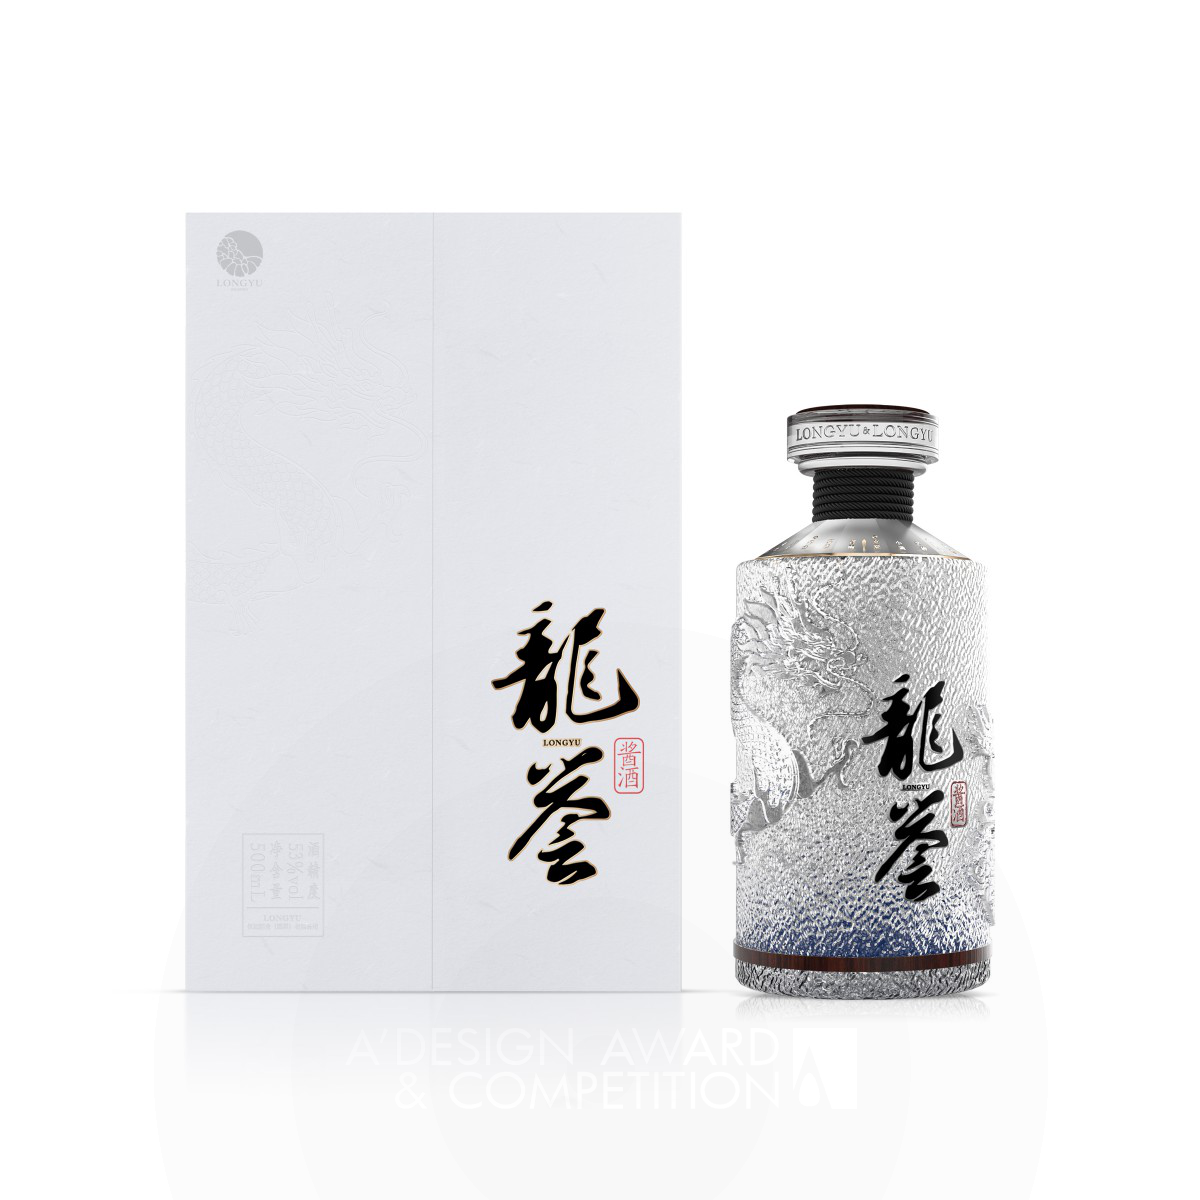 Wang Lina Sauce Wine Packaging